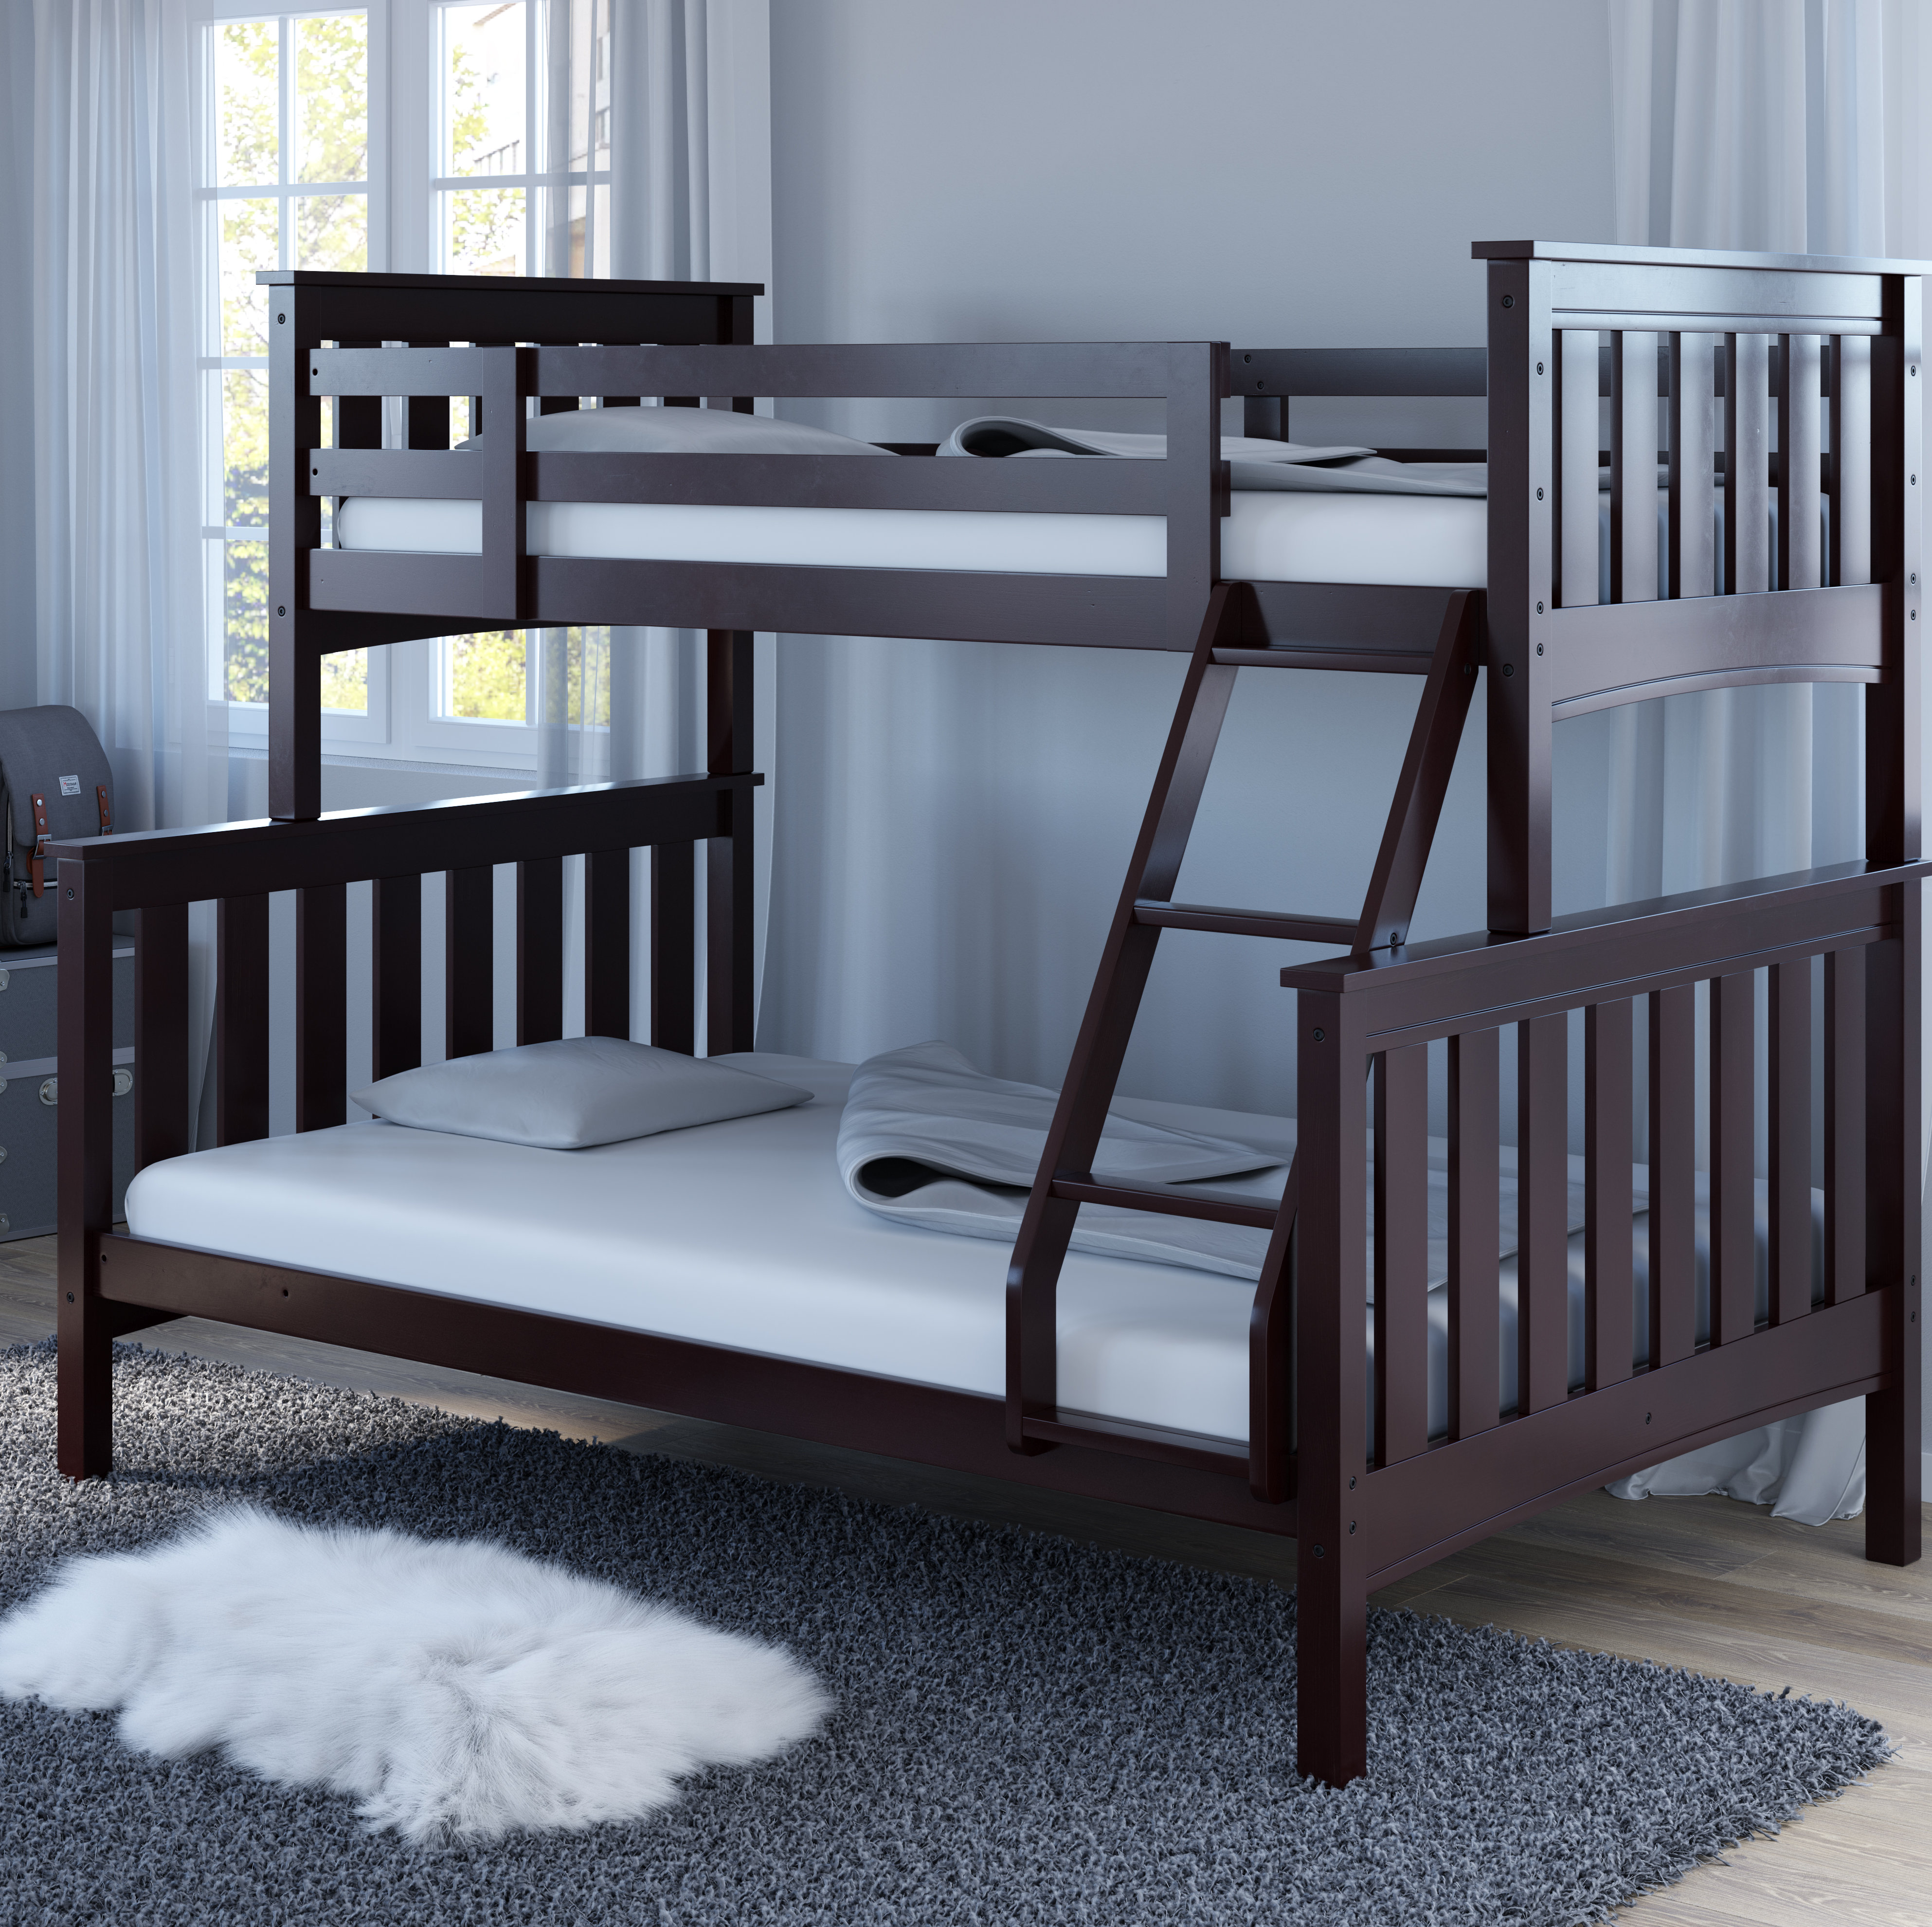 Thomasvillekids Twin Over Full Standard Bunk Bed By Thomasville Kids Reviews Wayfair